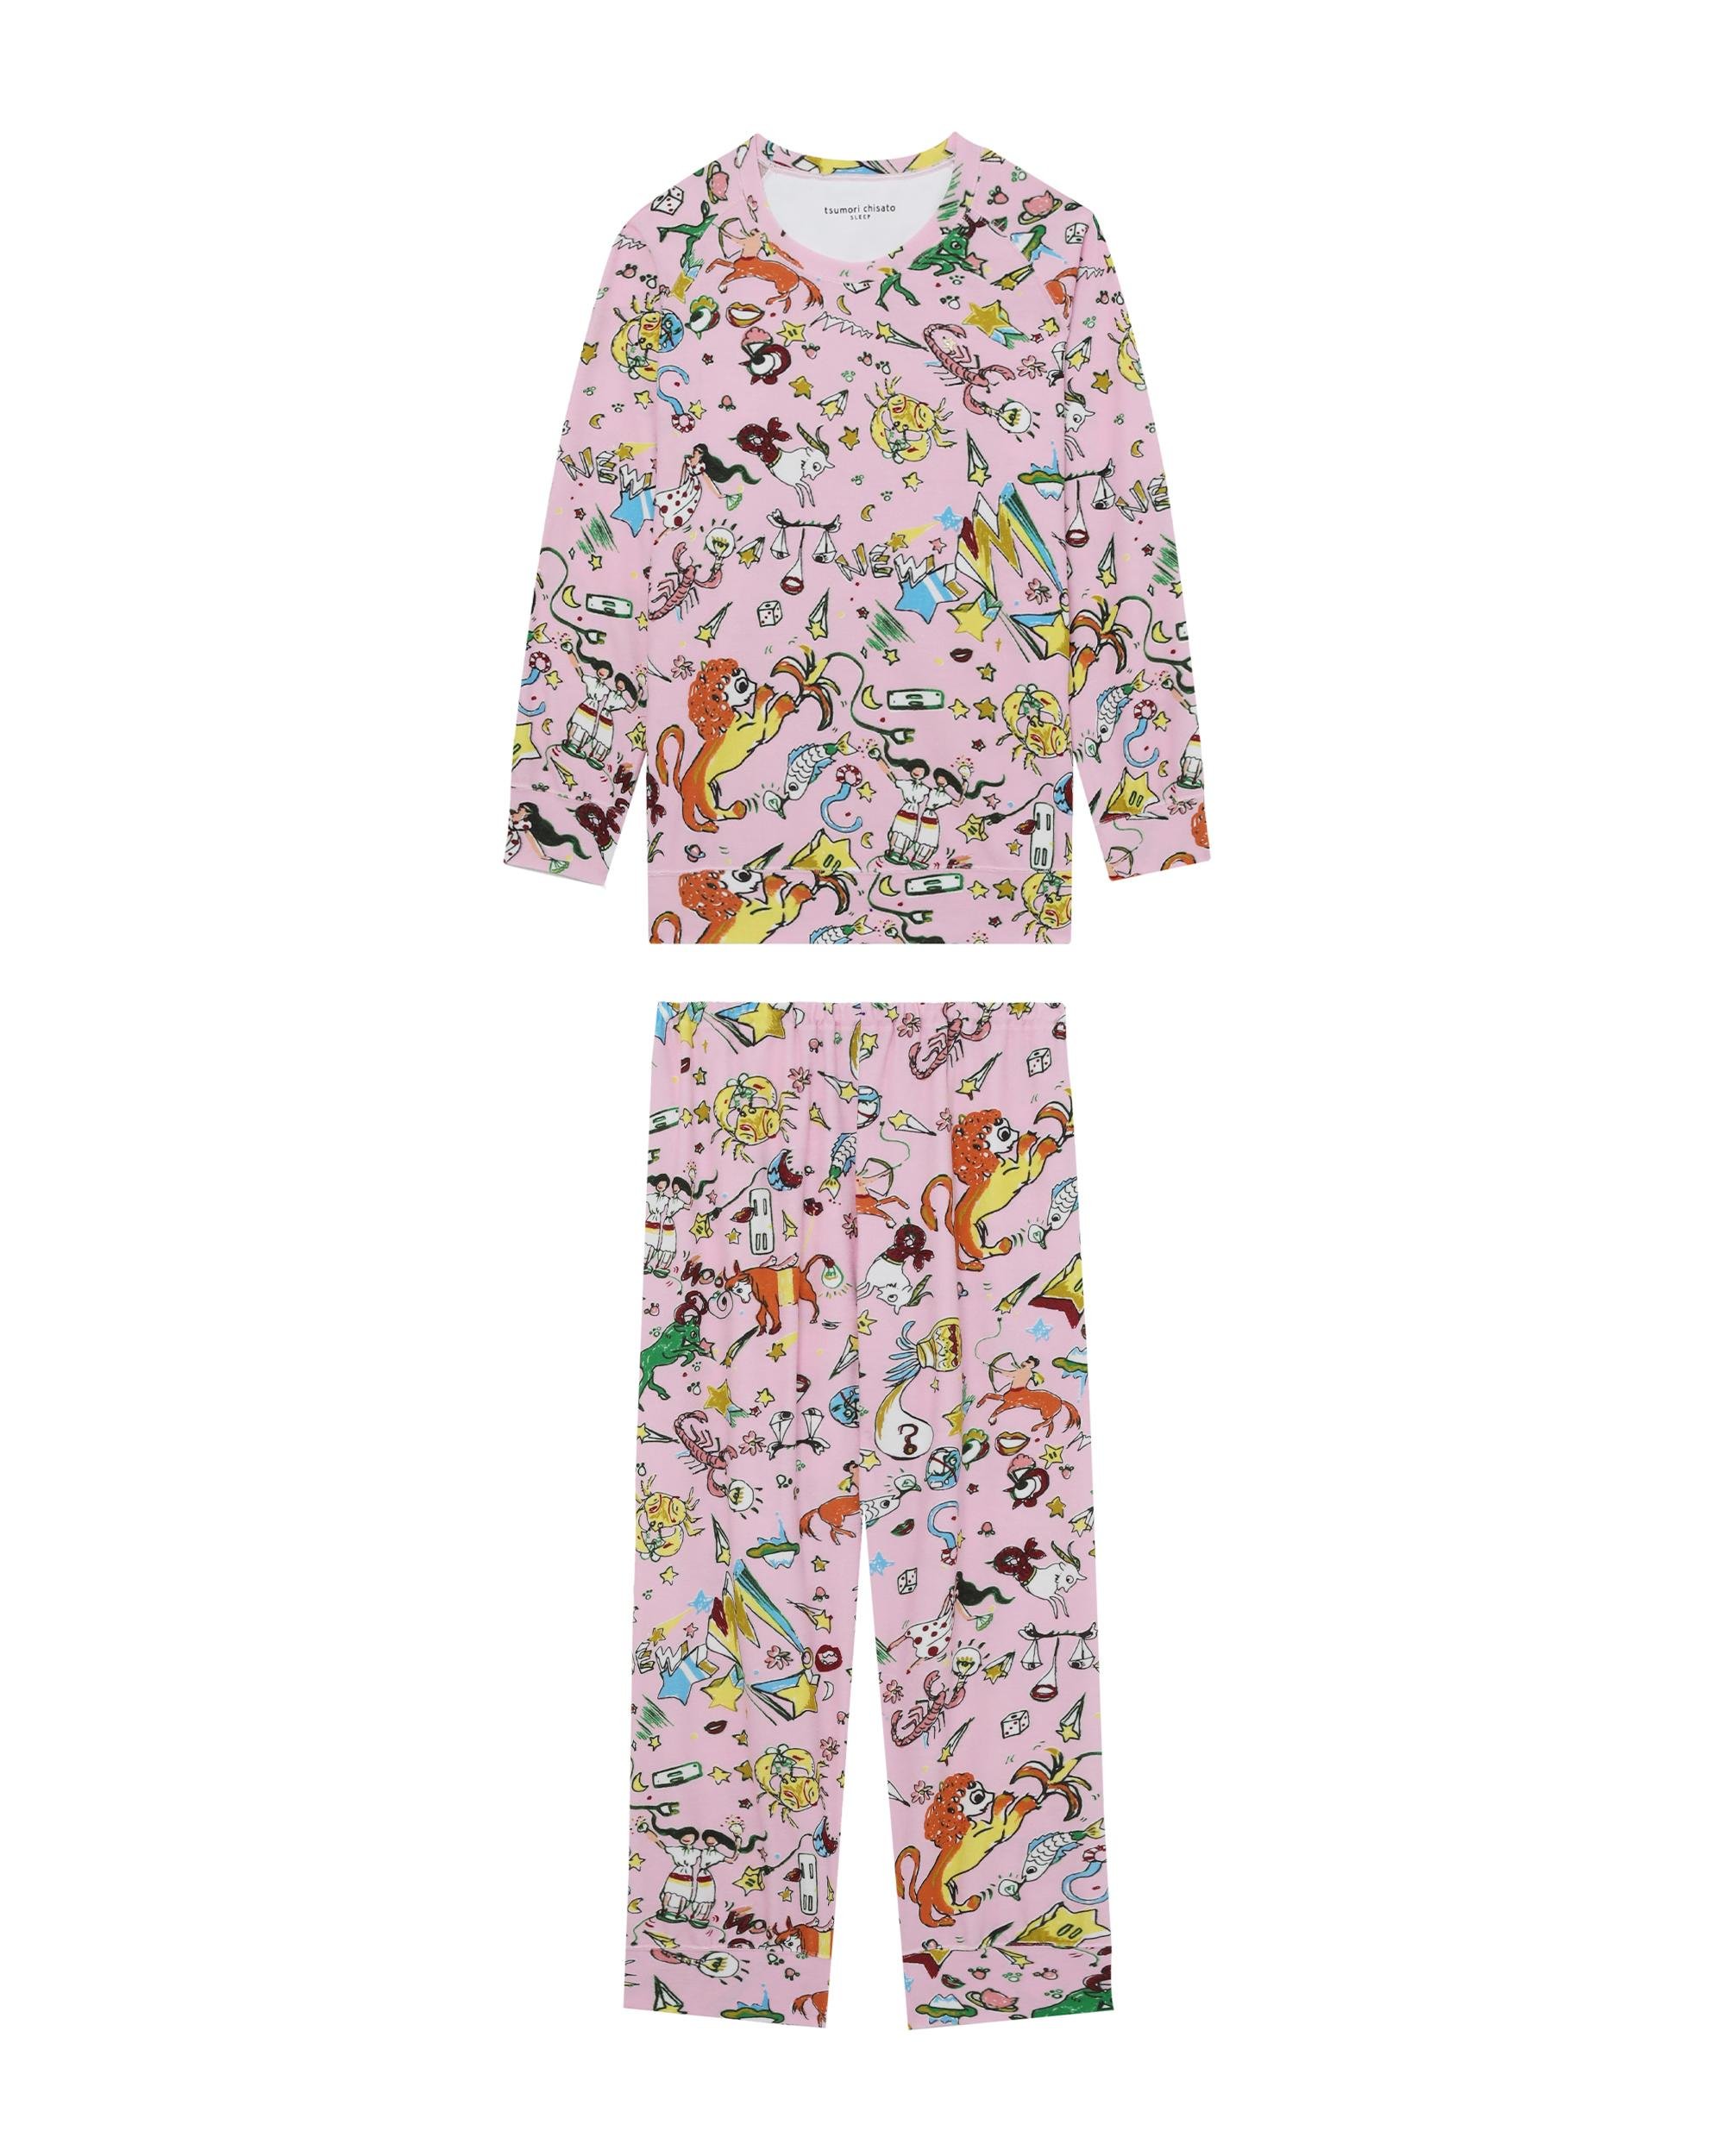 Patterned sleepwear set by TSUMORI CHISATO